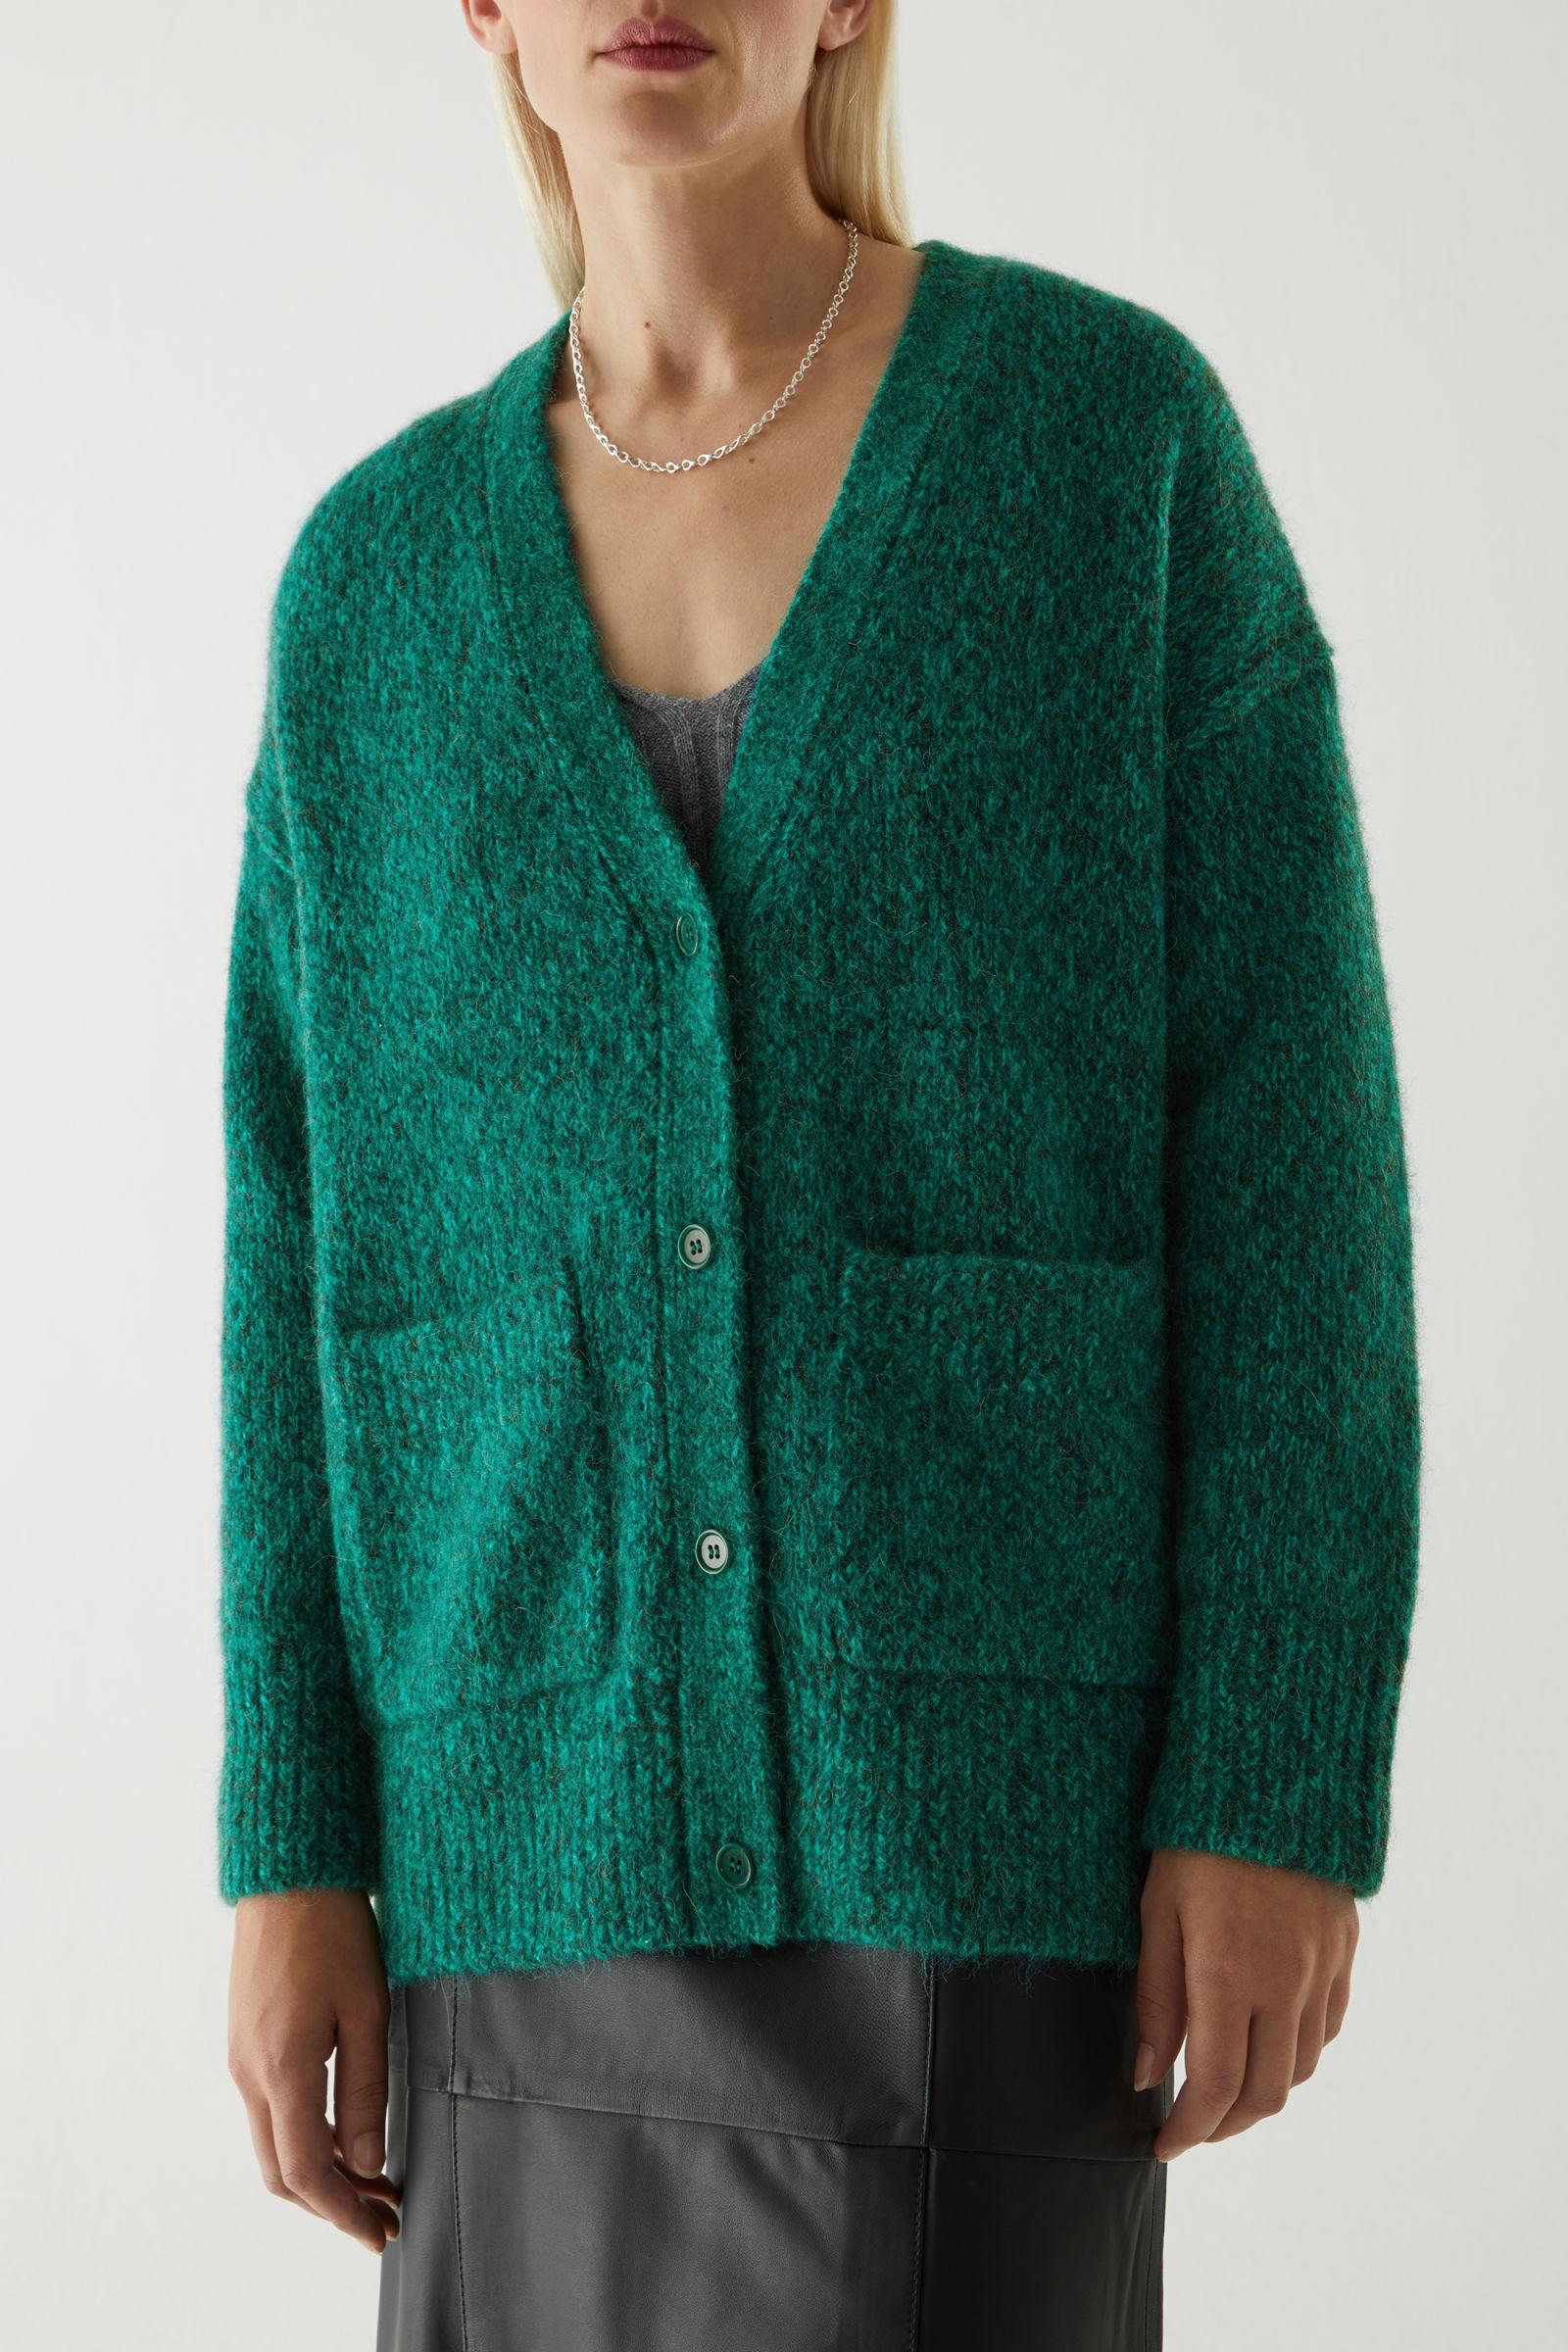 COS Brushed Alpaca-wool Mix Cardigan in Green - Lyst